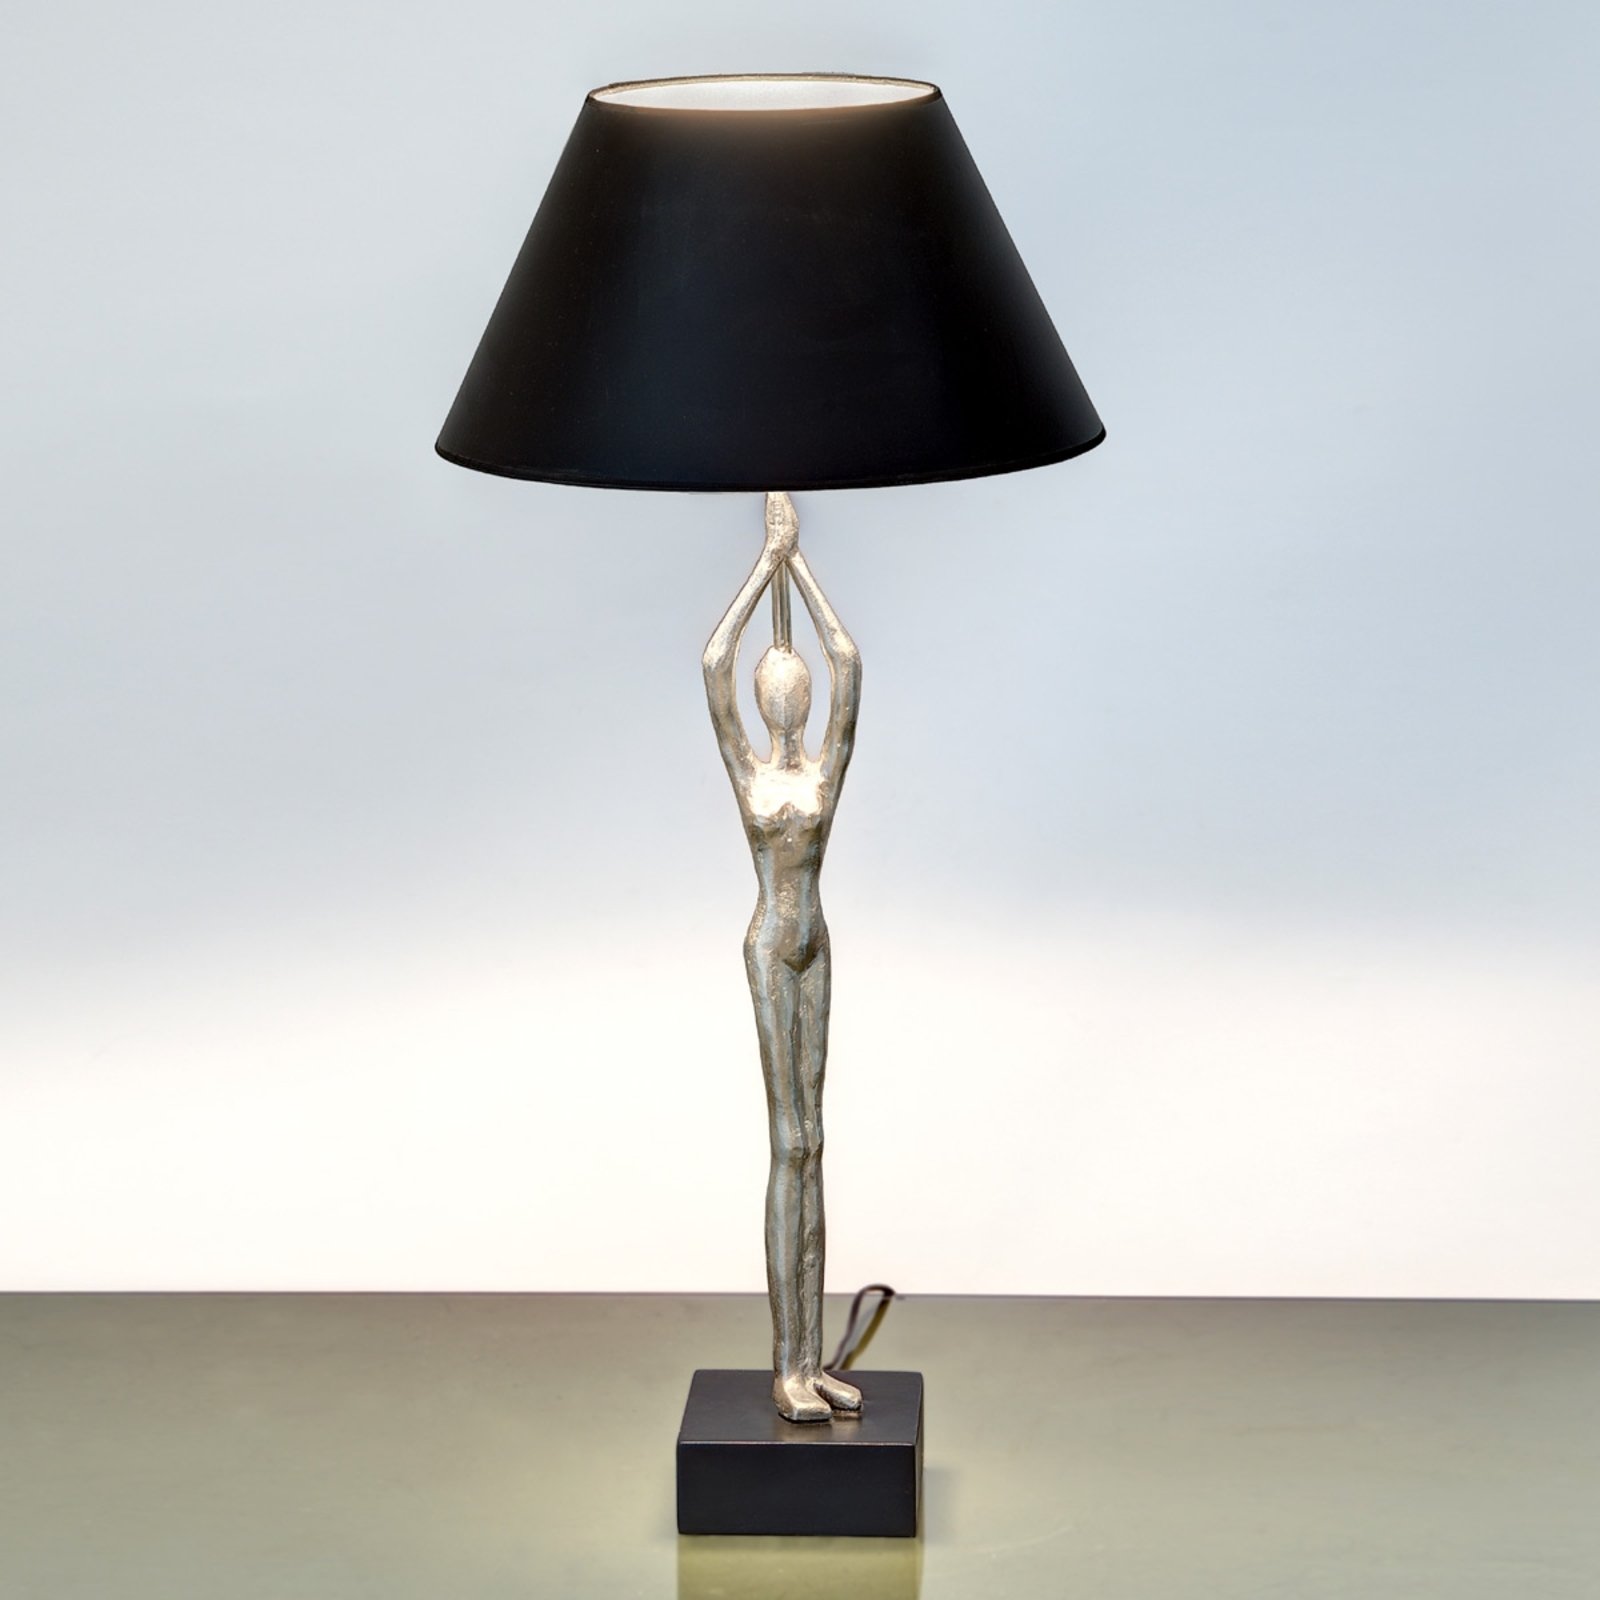 Designer table lamp Ballerino with figure